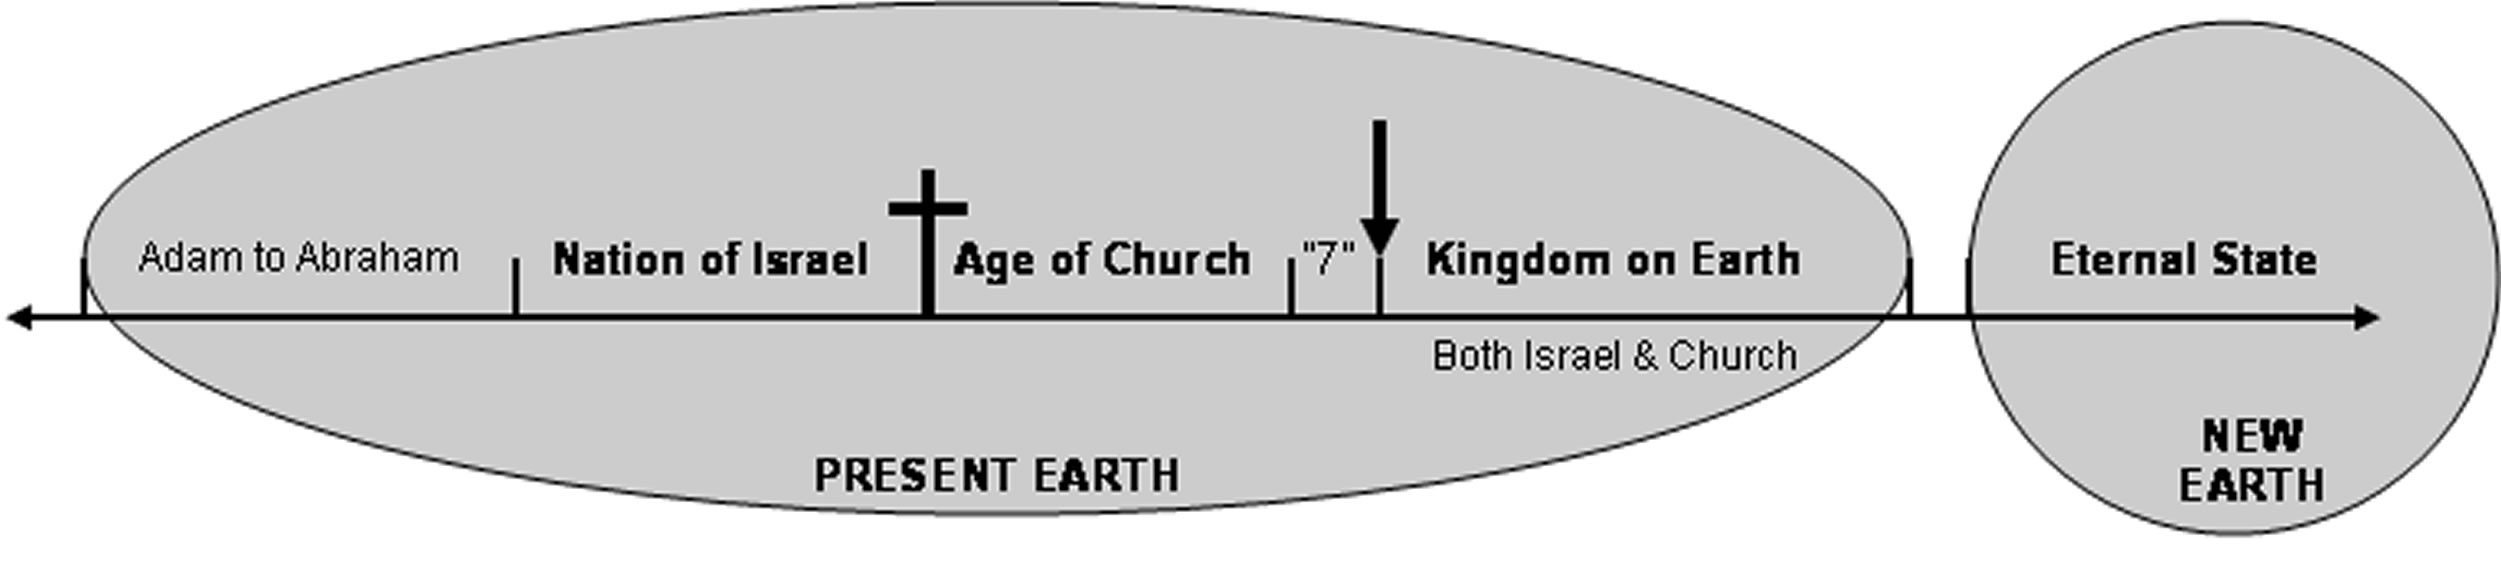 Present earth new earth diagram